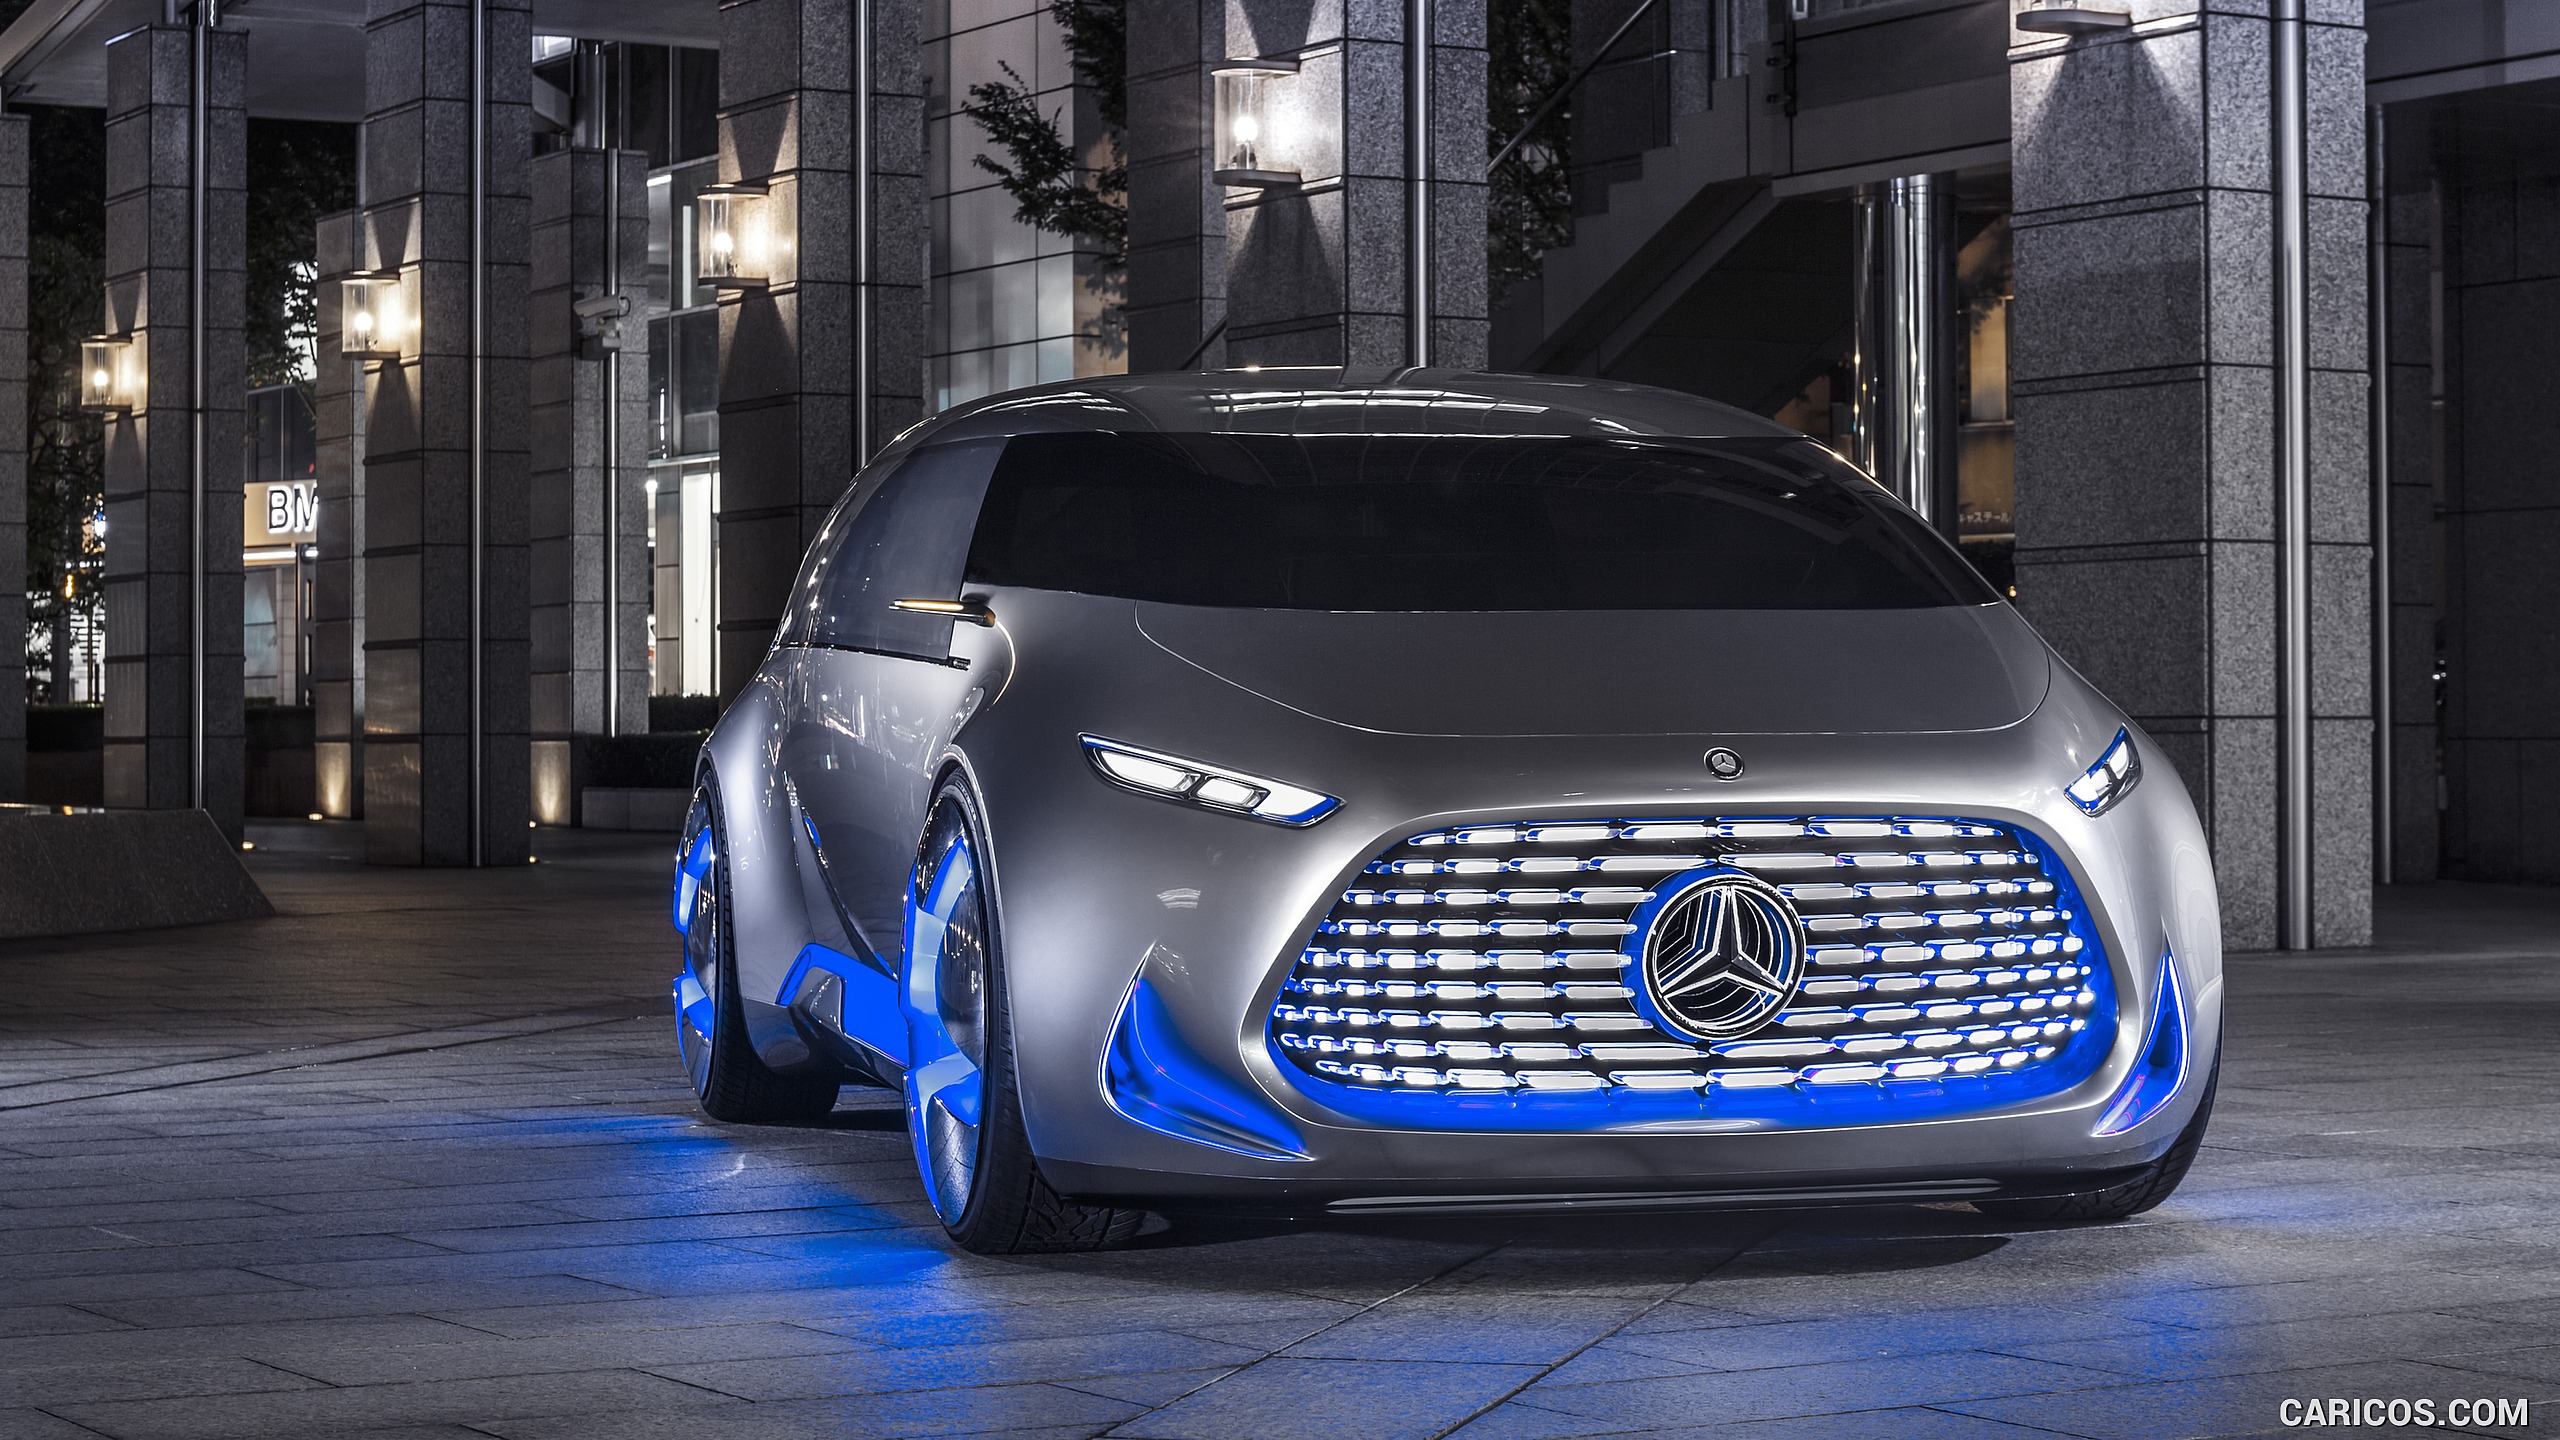 2015 Mercedes-Benz Vision Tokyo Concept - Front, #4 of 22